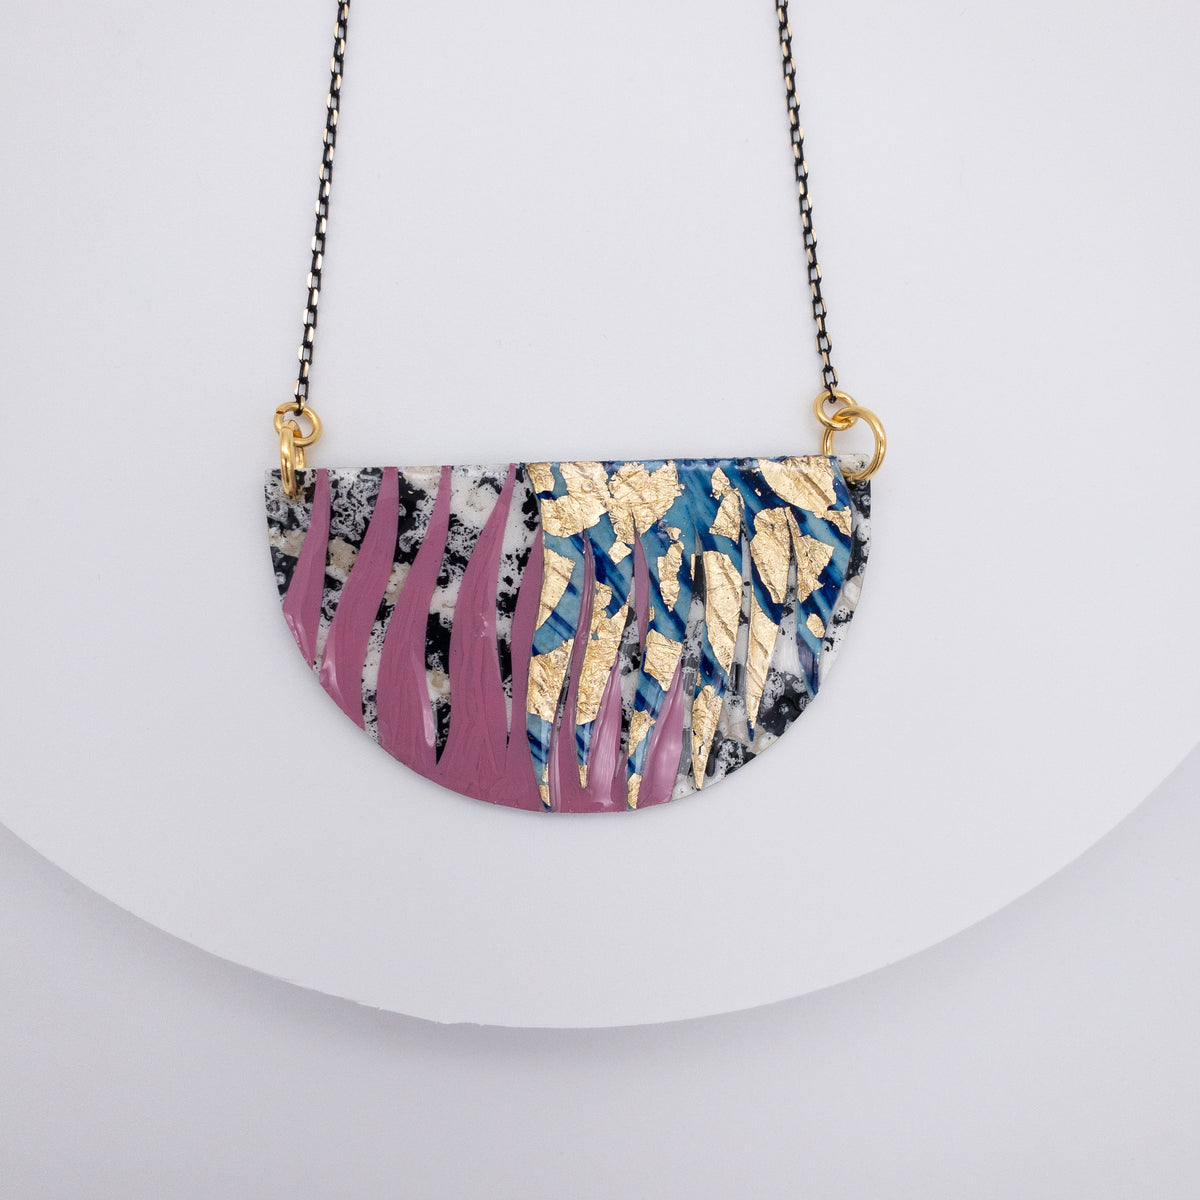 Bláth batik necklace in charcoal/deep-rose/gold/lapis